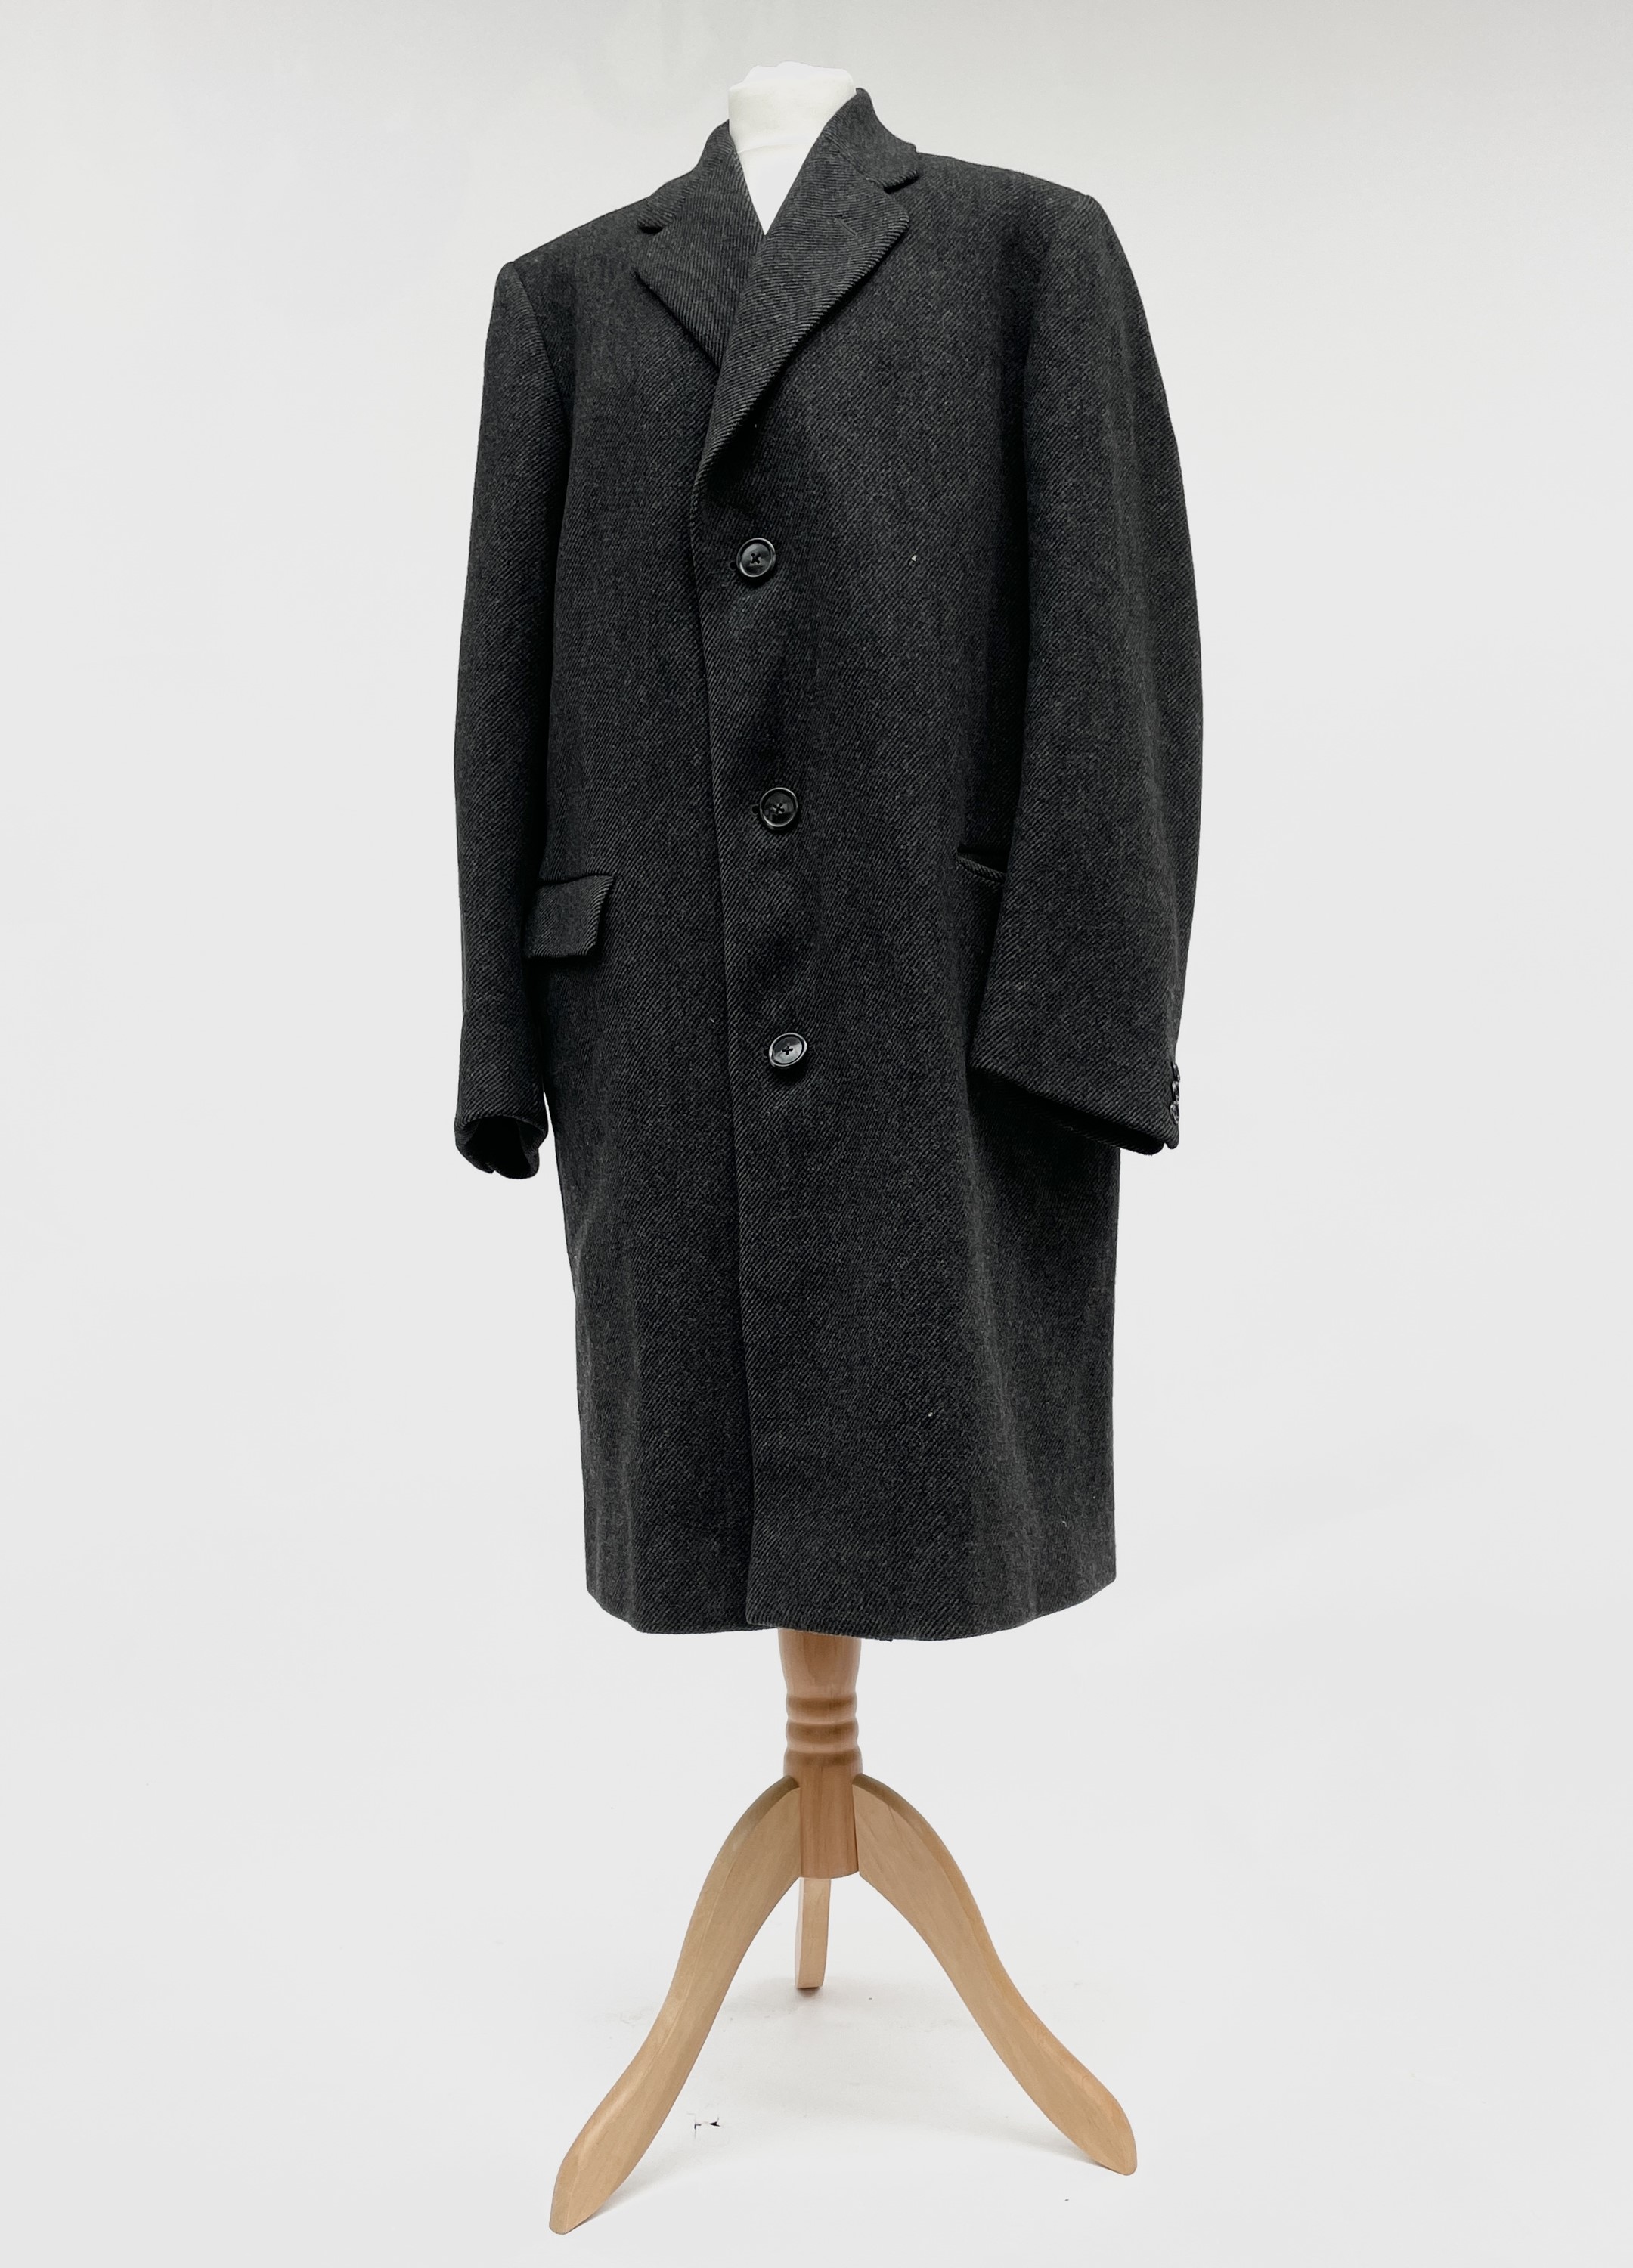 Lot 2804 - A gentleman's Daks 'Simpson Tailored' wool